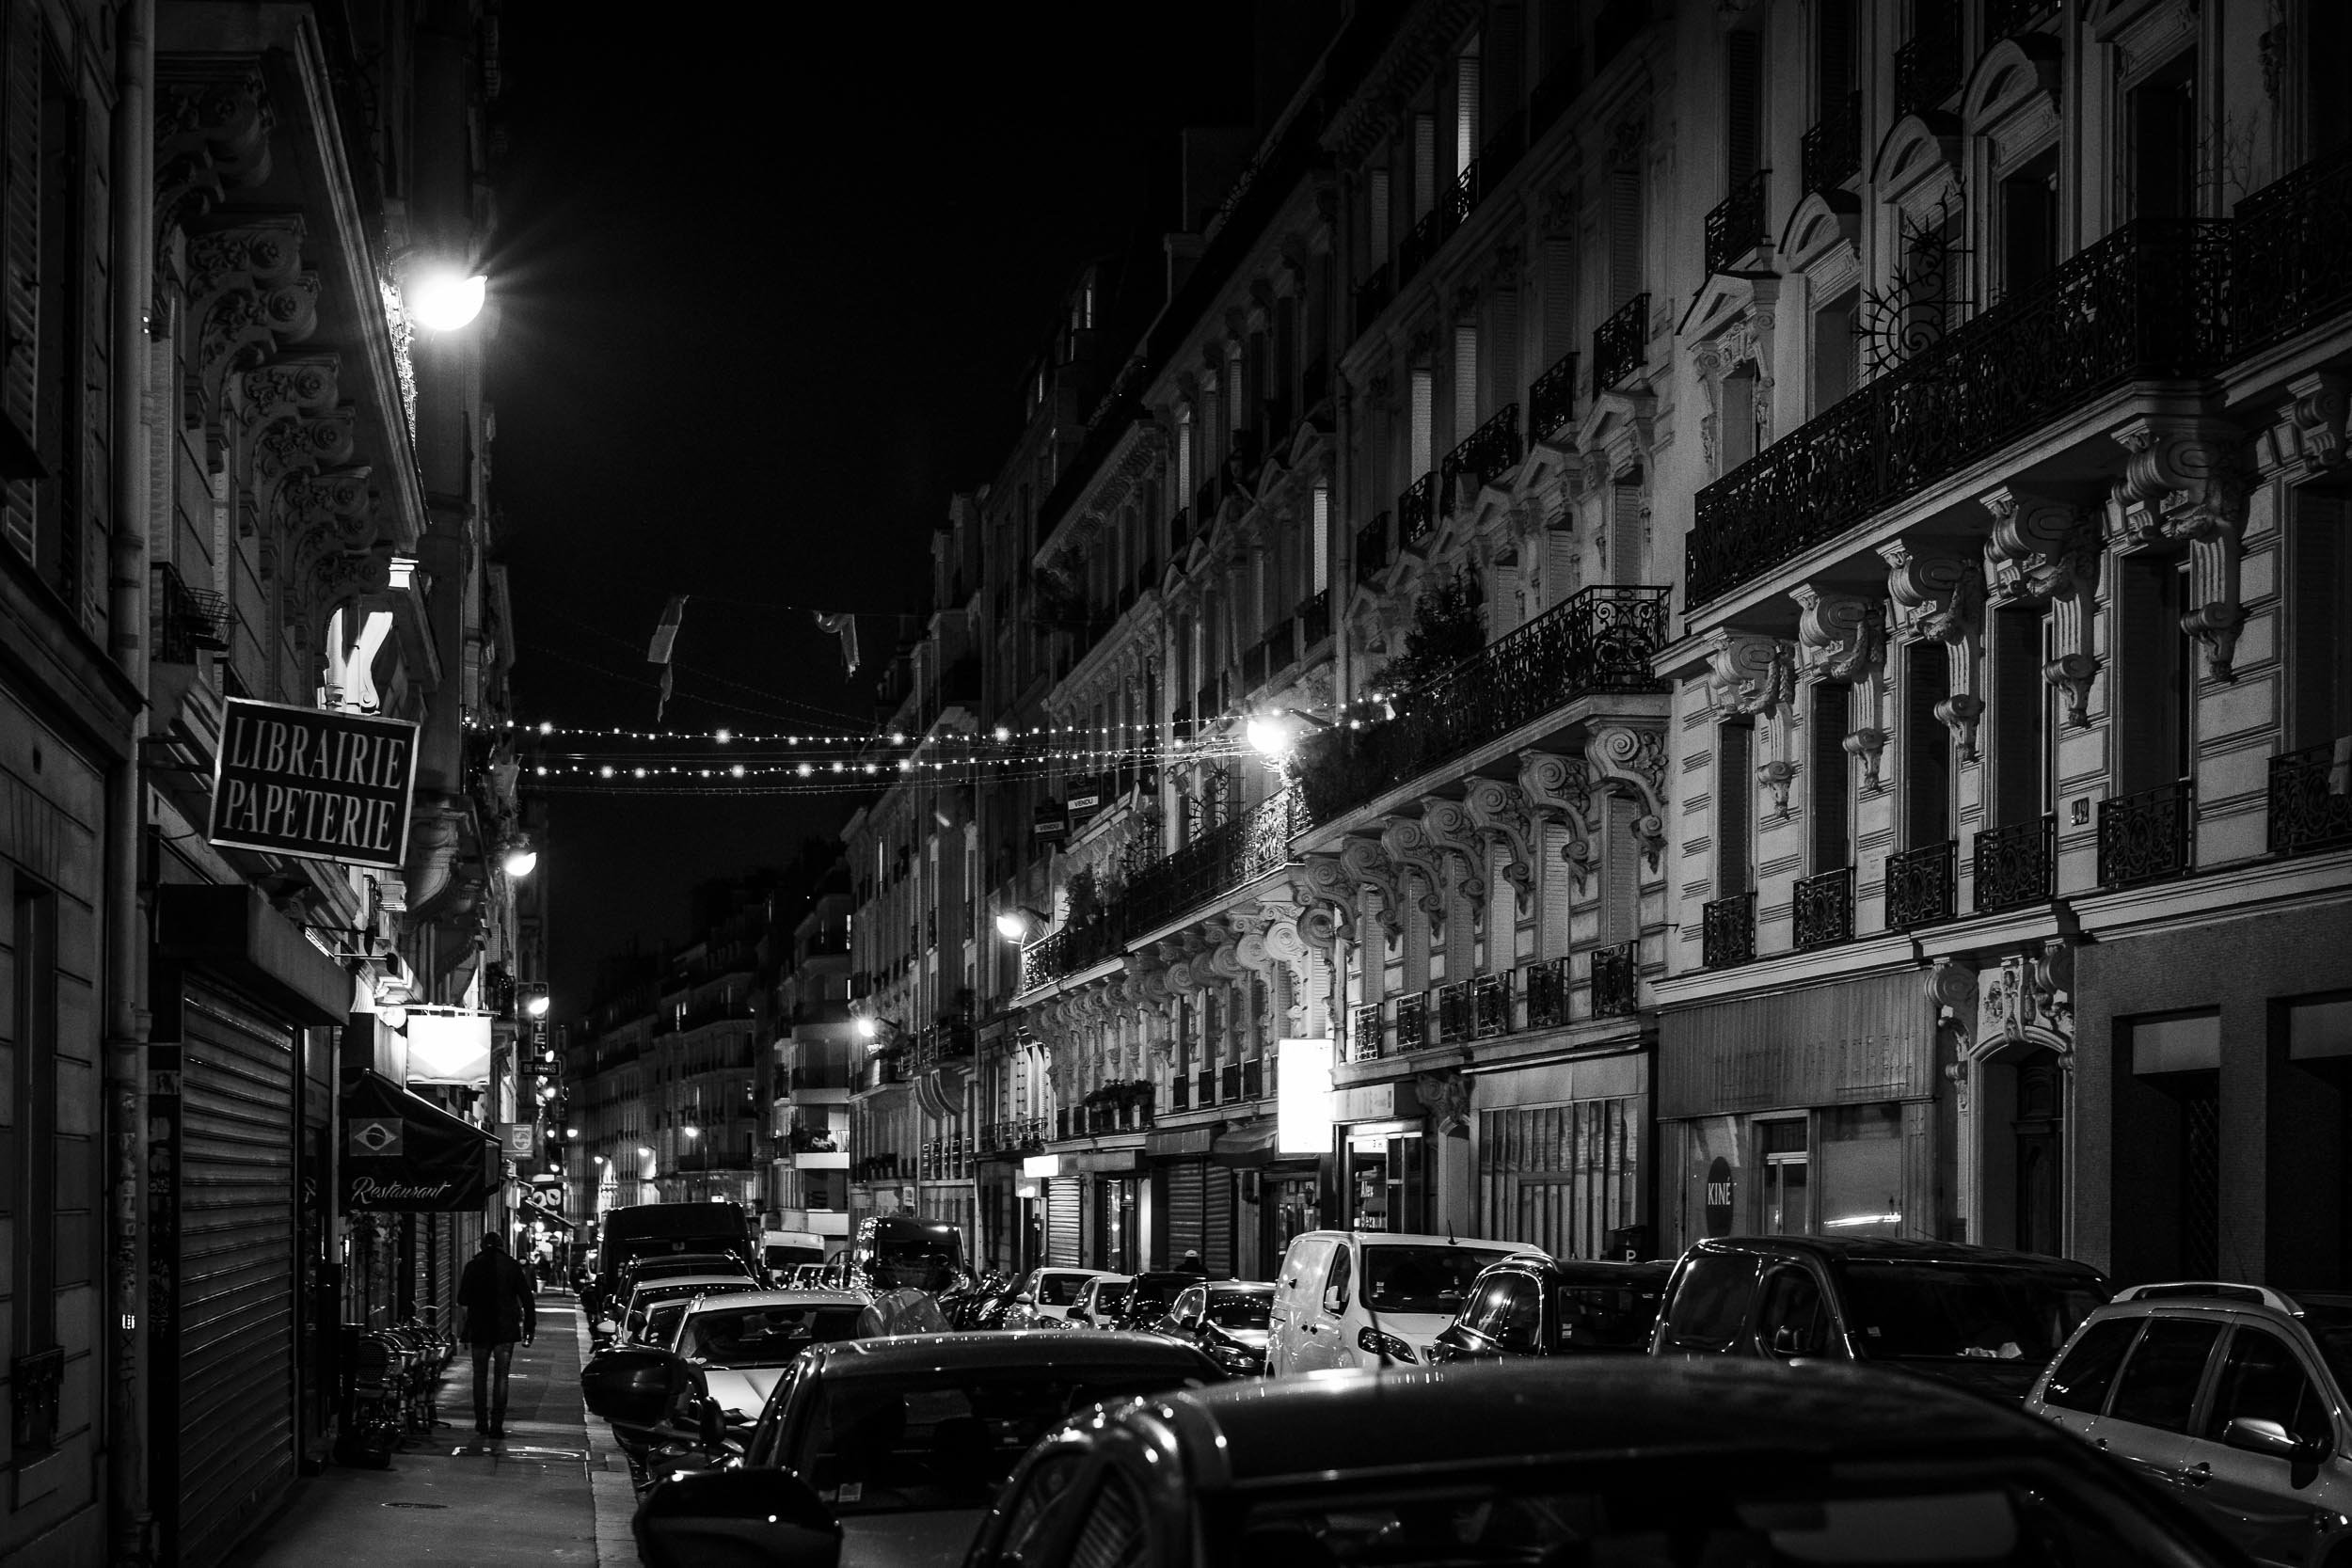 056-street-view-at-night-paris.jpg